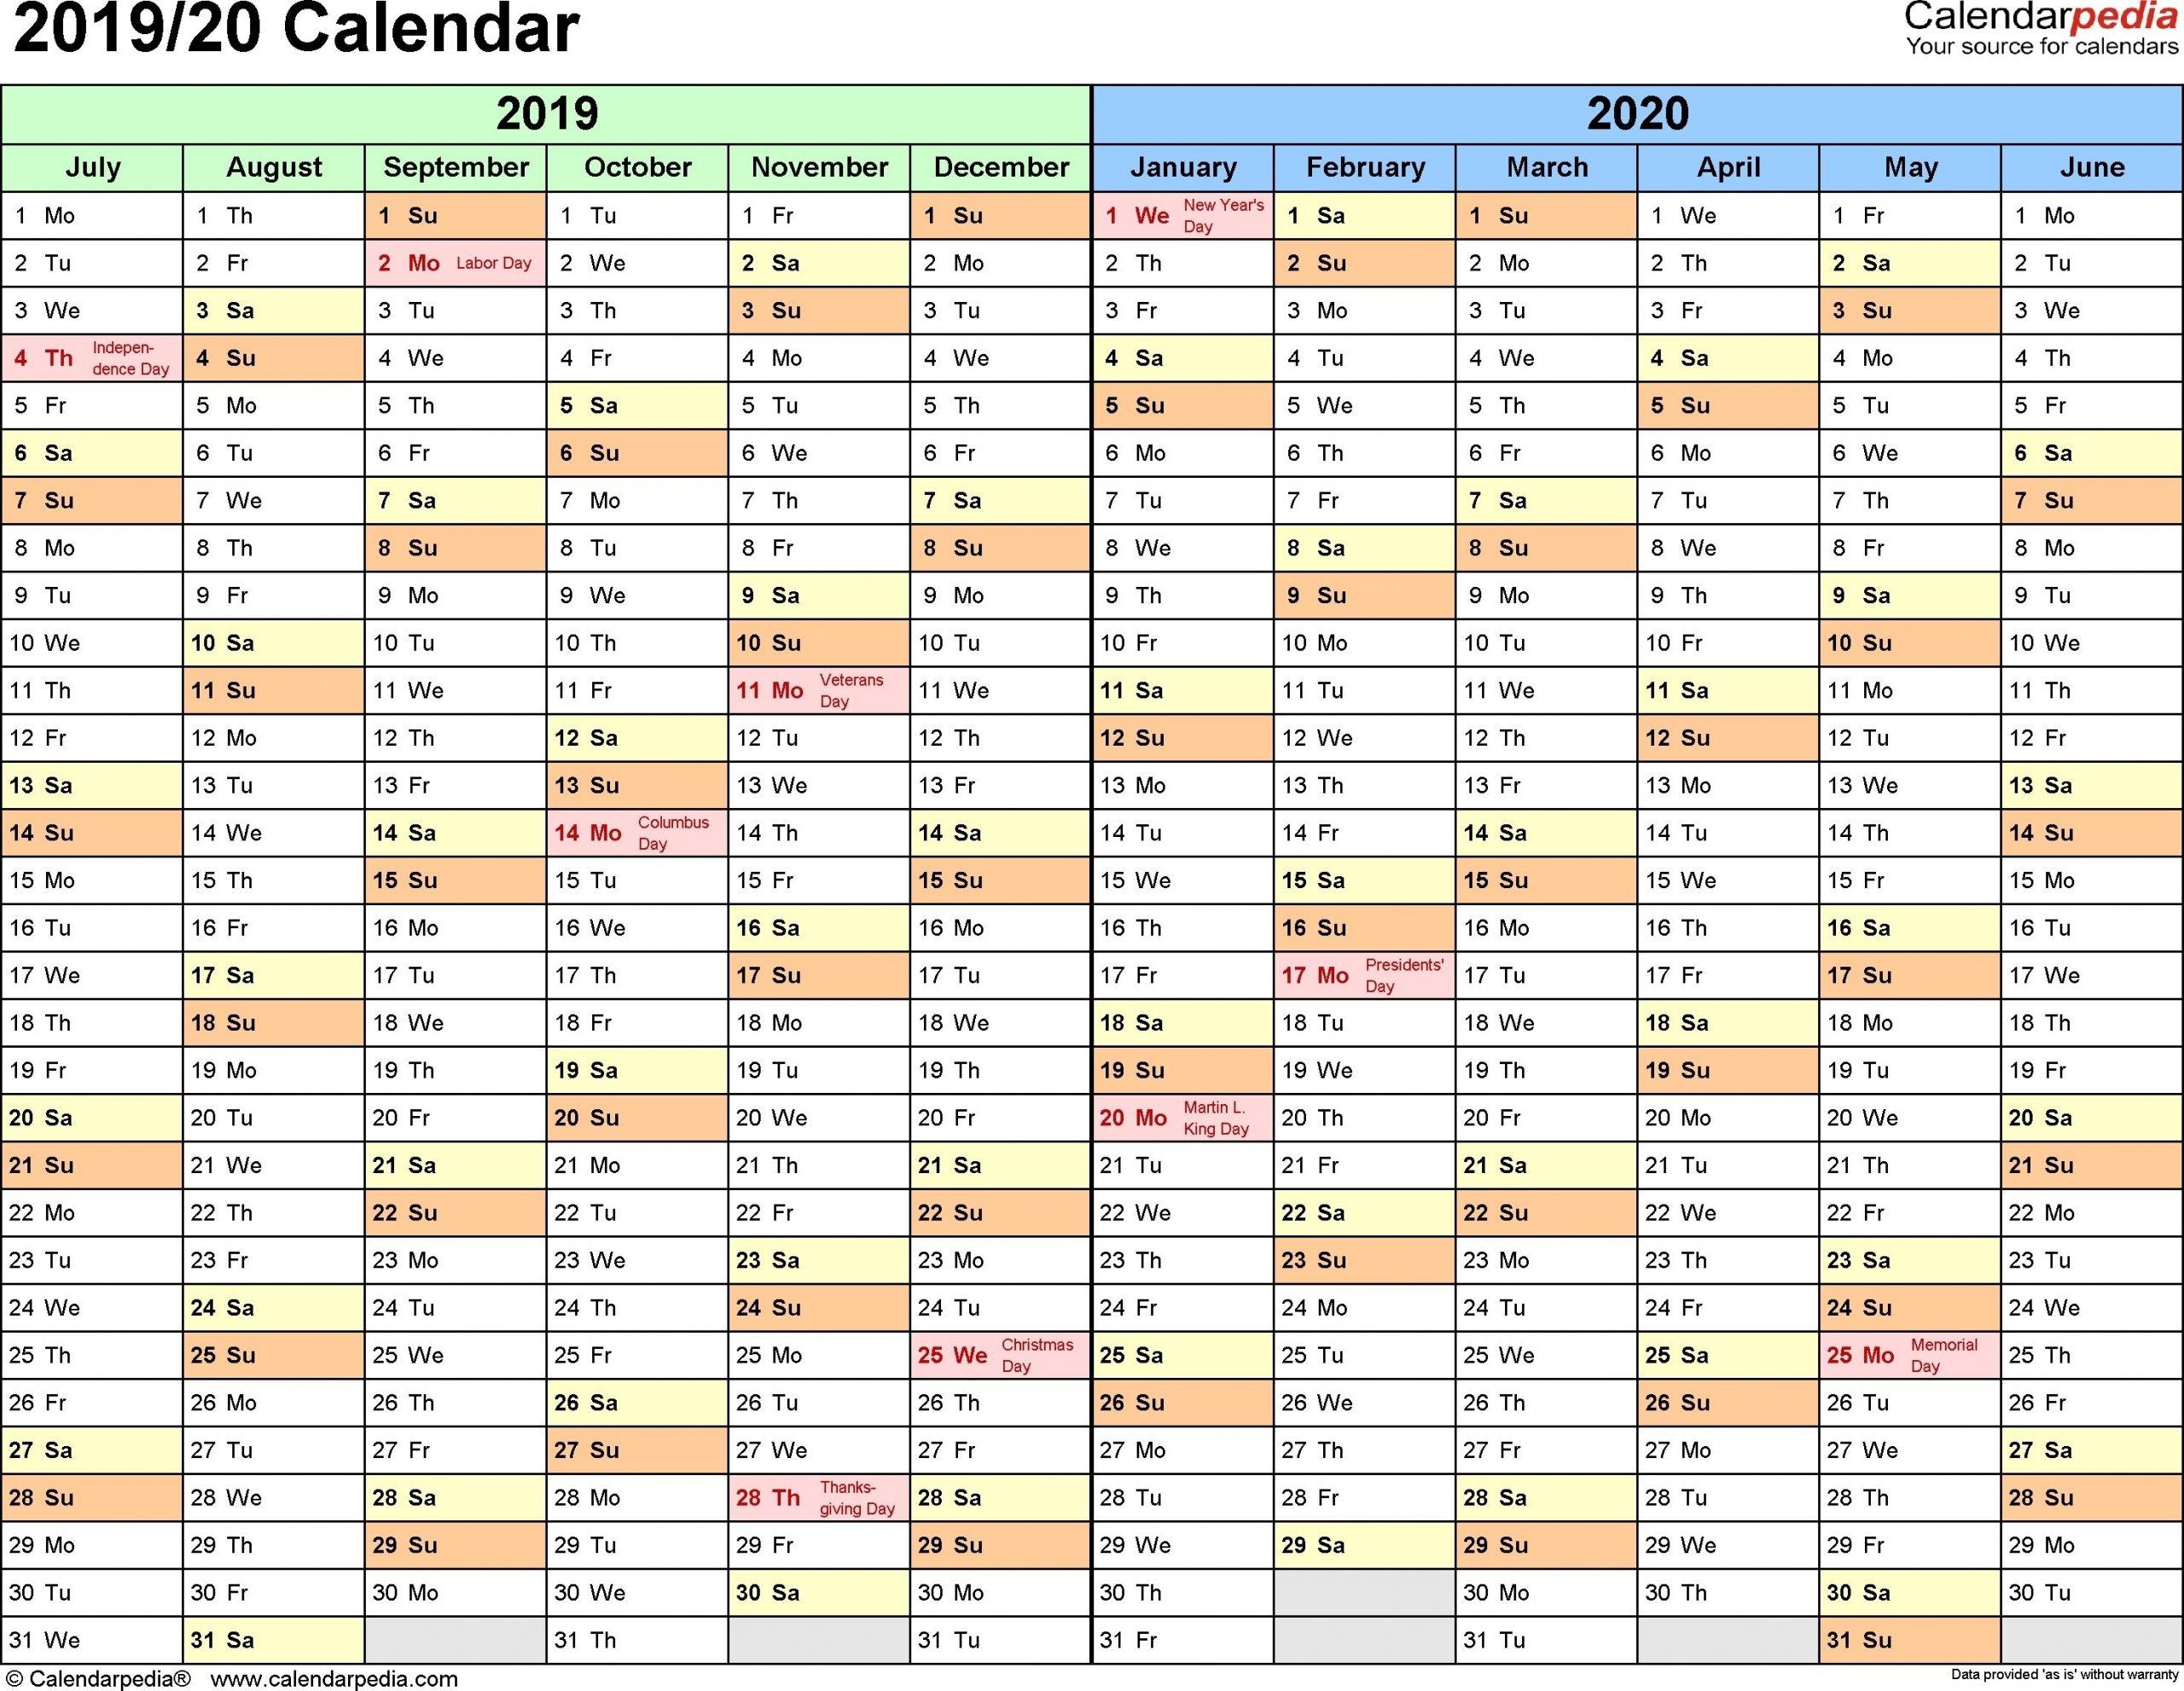 Financial Week Calendar 2019 2020 In 2020 | Calendar intended for Financial Week To Calendar 2019